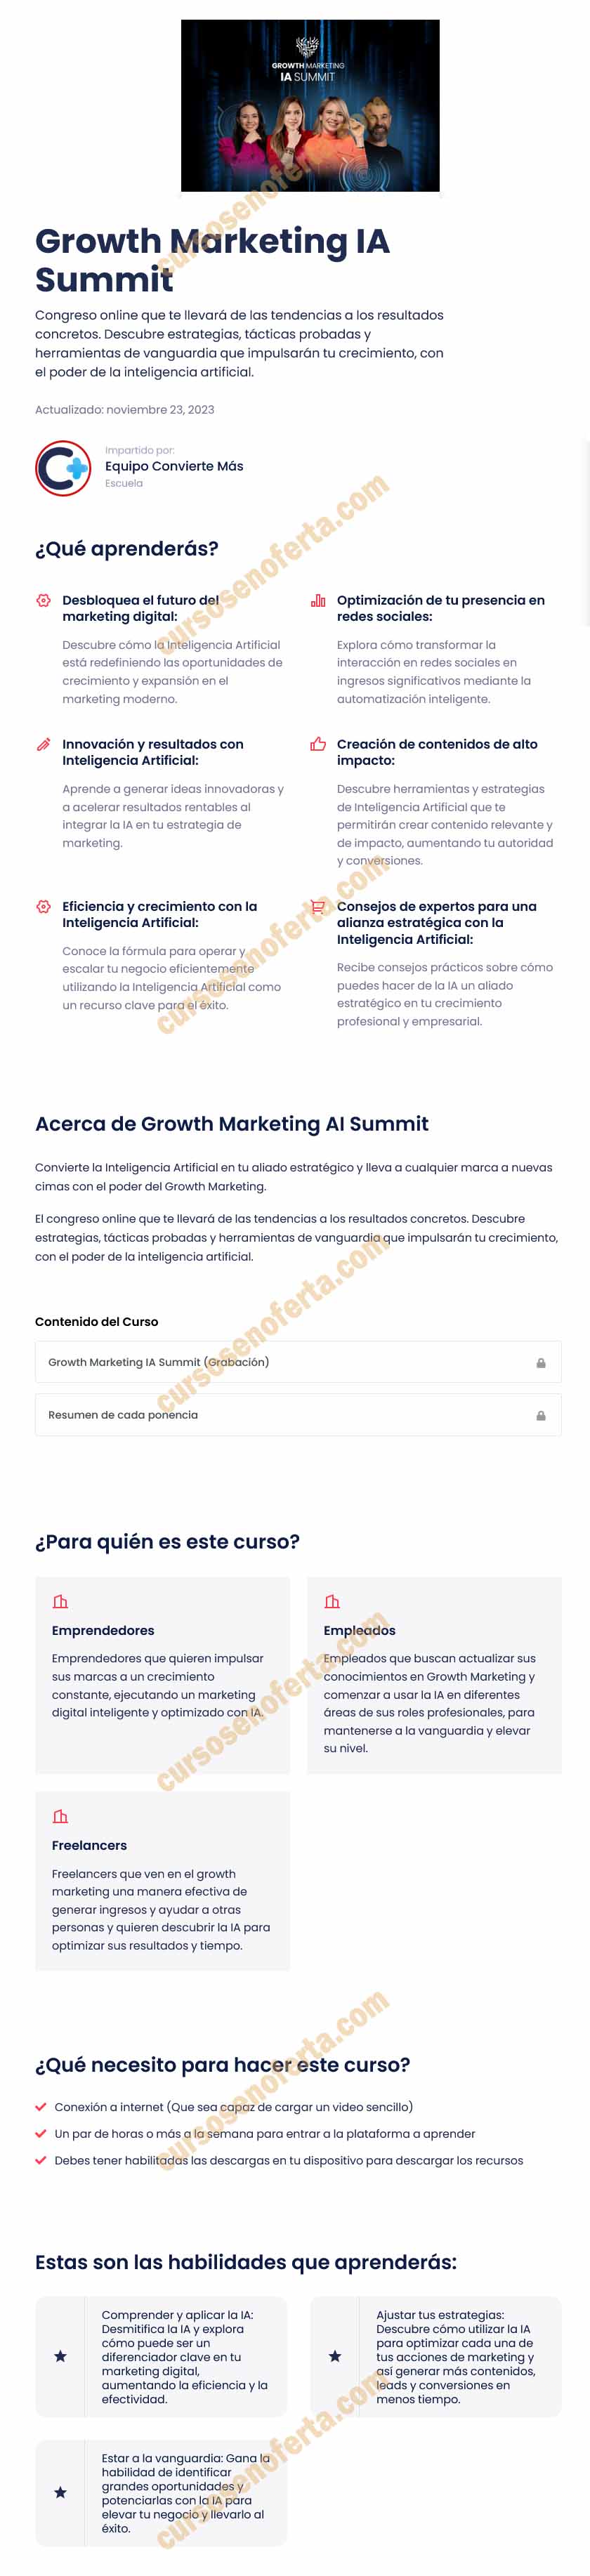 Growth Marketing IA Summit - Convierte Más